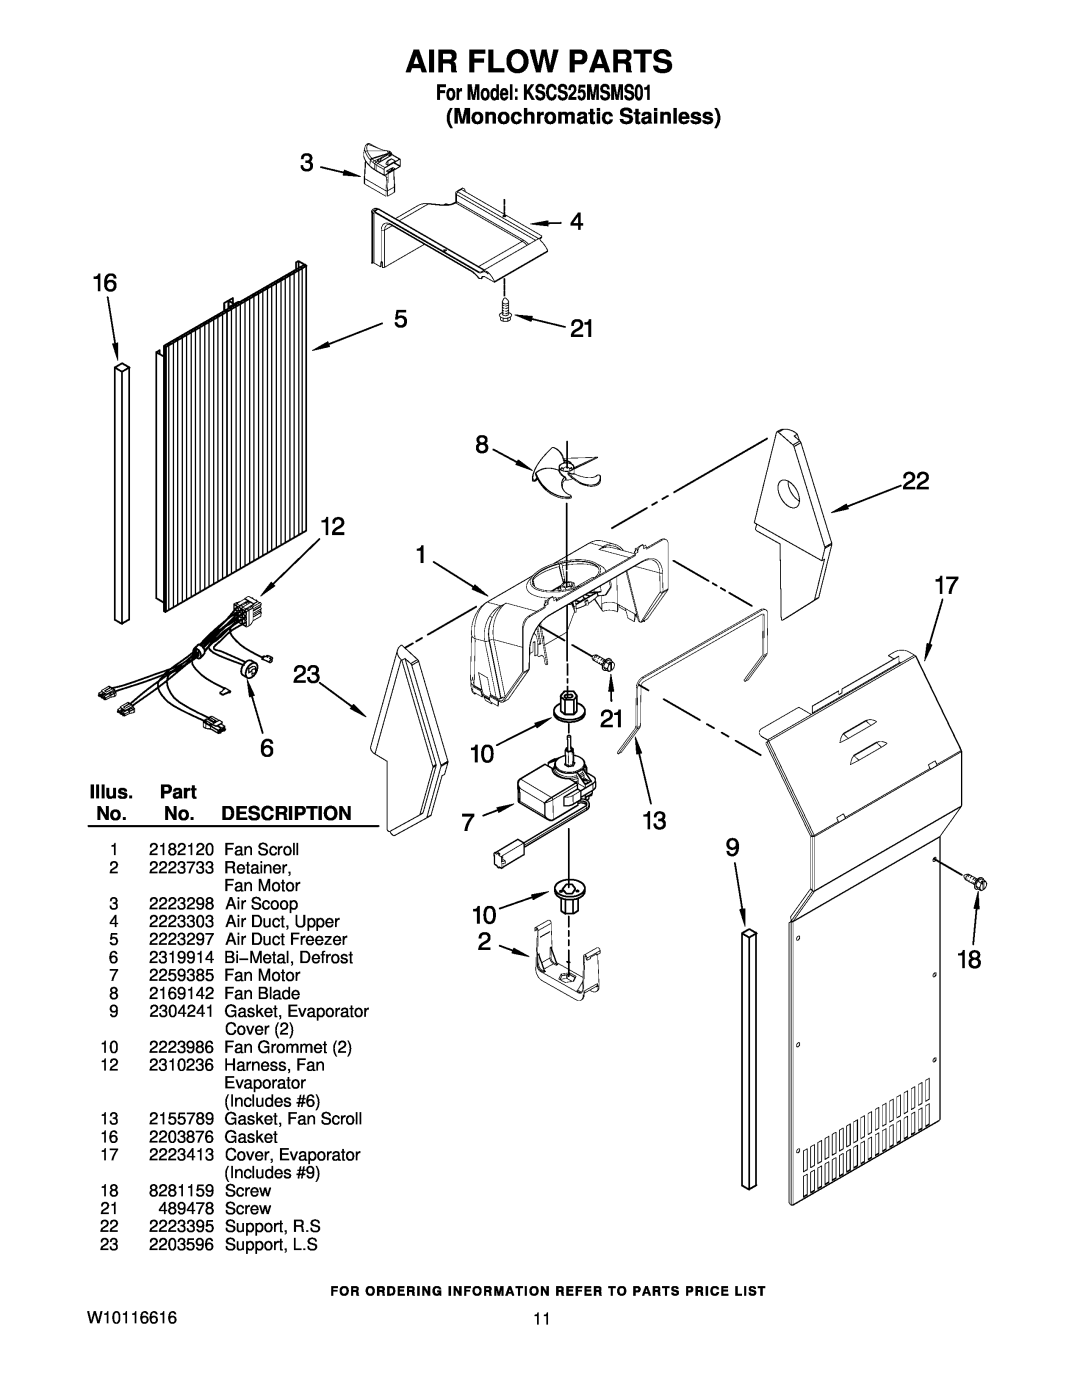 KitchenAid manual Air Flow Parts, For Model KSCS25MSMS01 Monochromatic Stainless, Illus, Description 